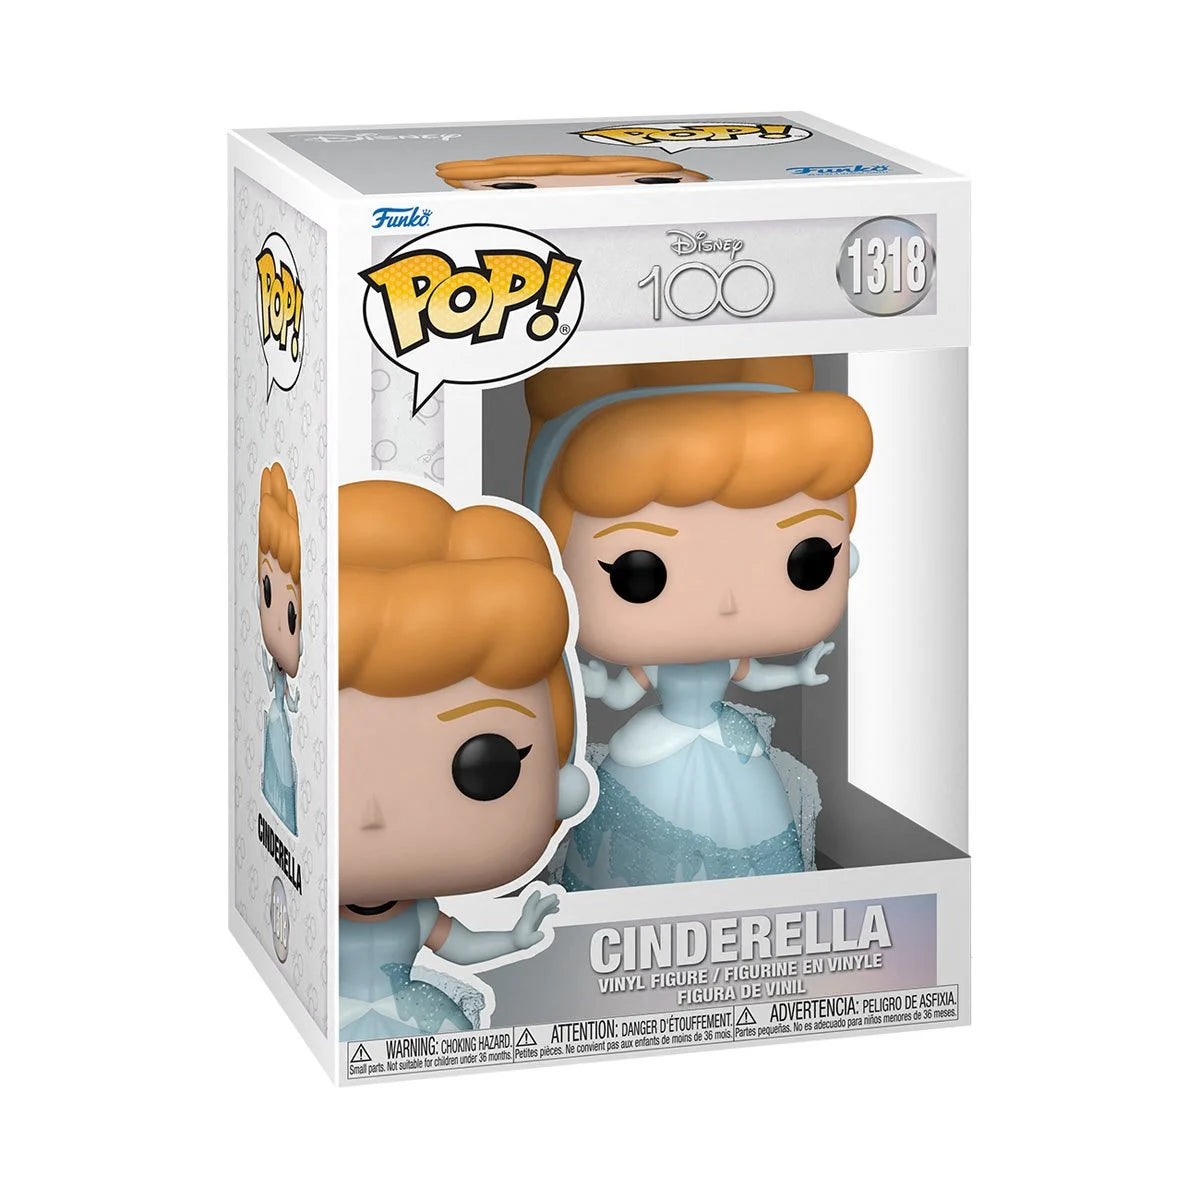 Disney 100 Pop! Cinderella Pop! Vinyl Figure